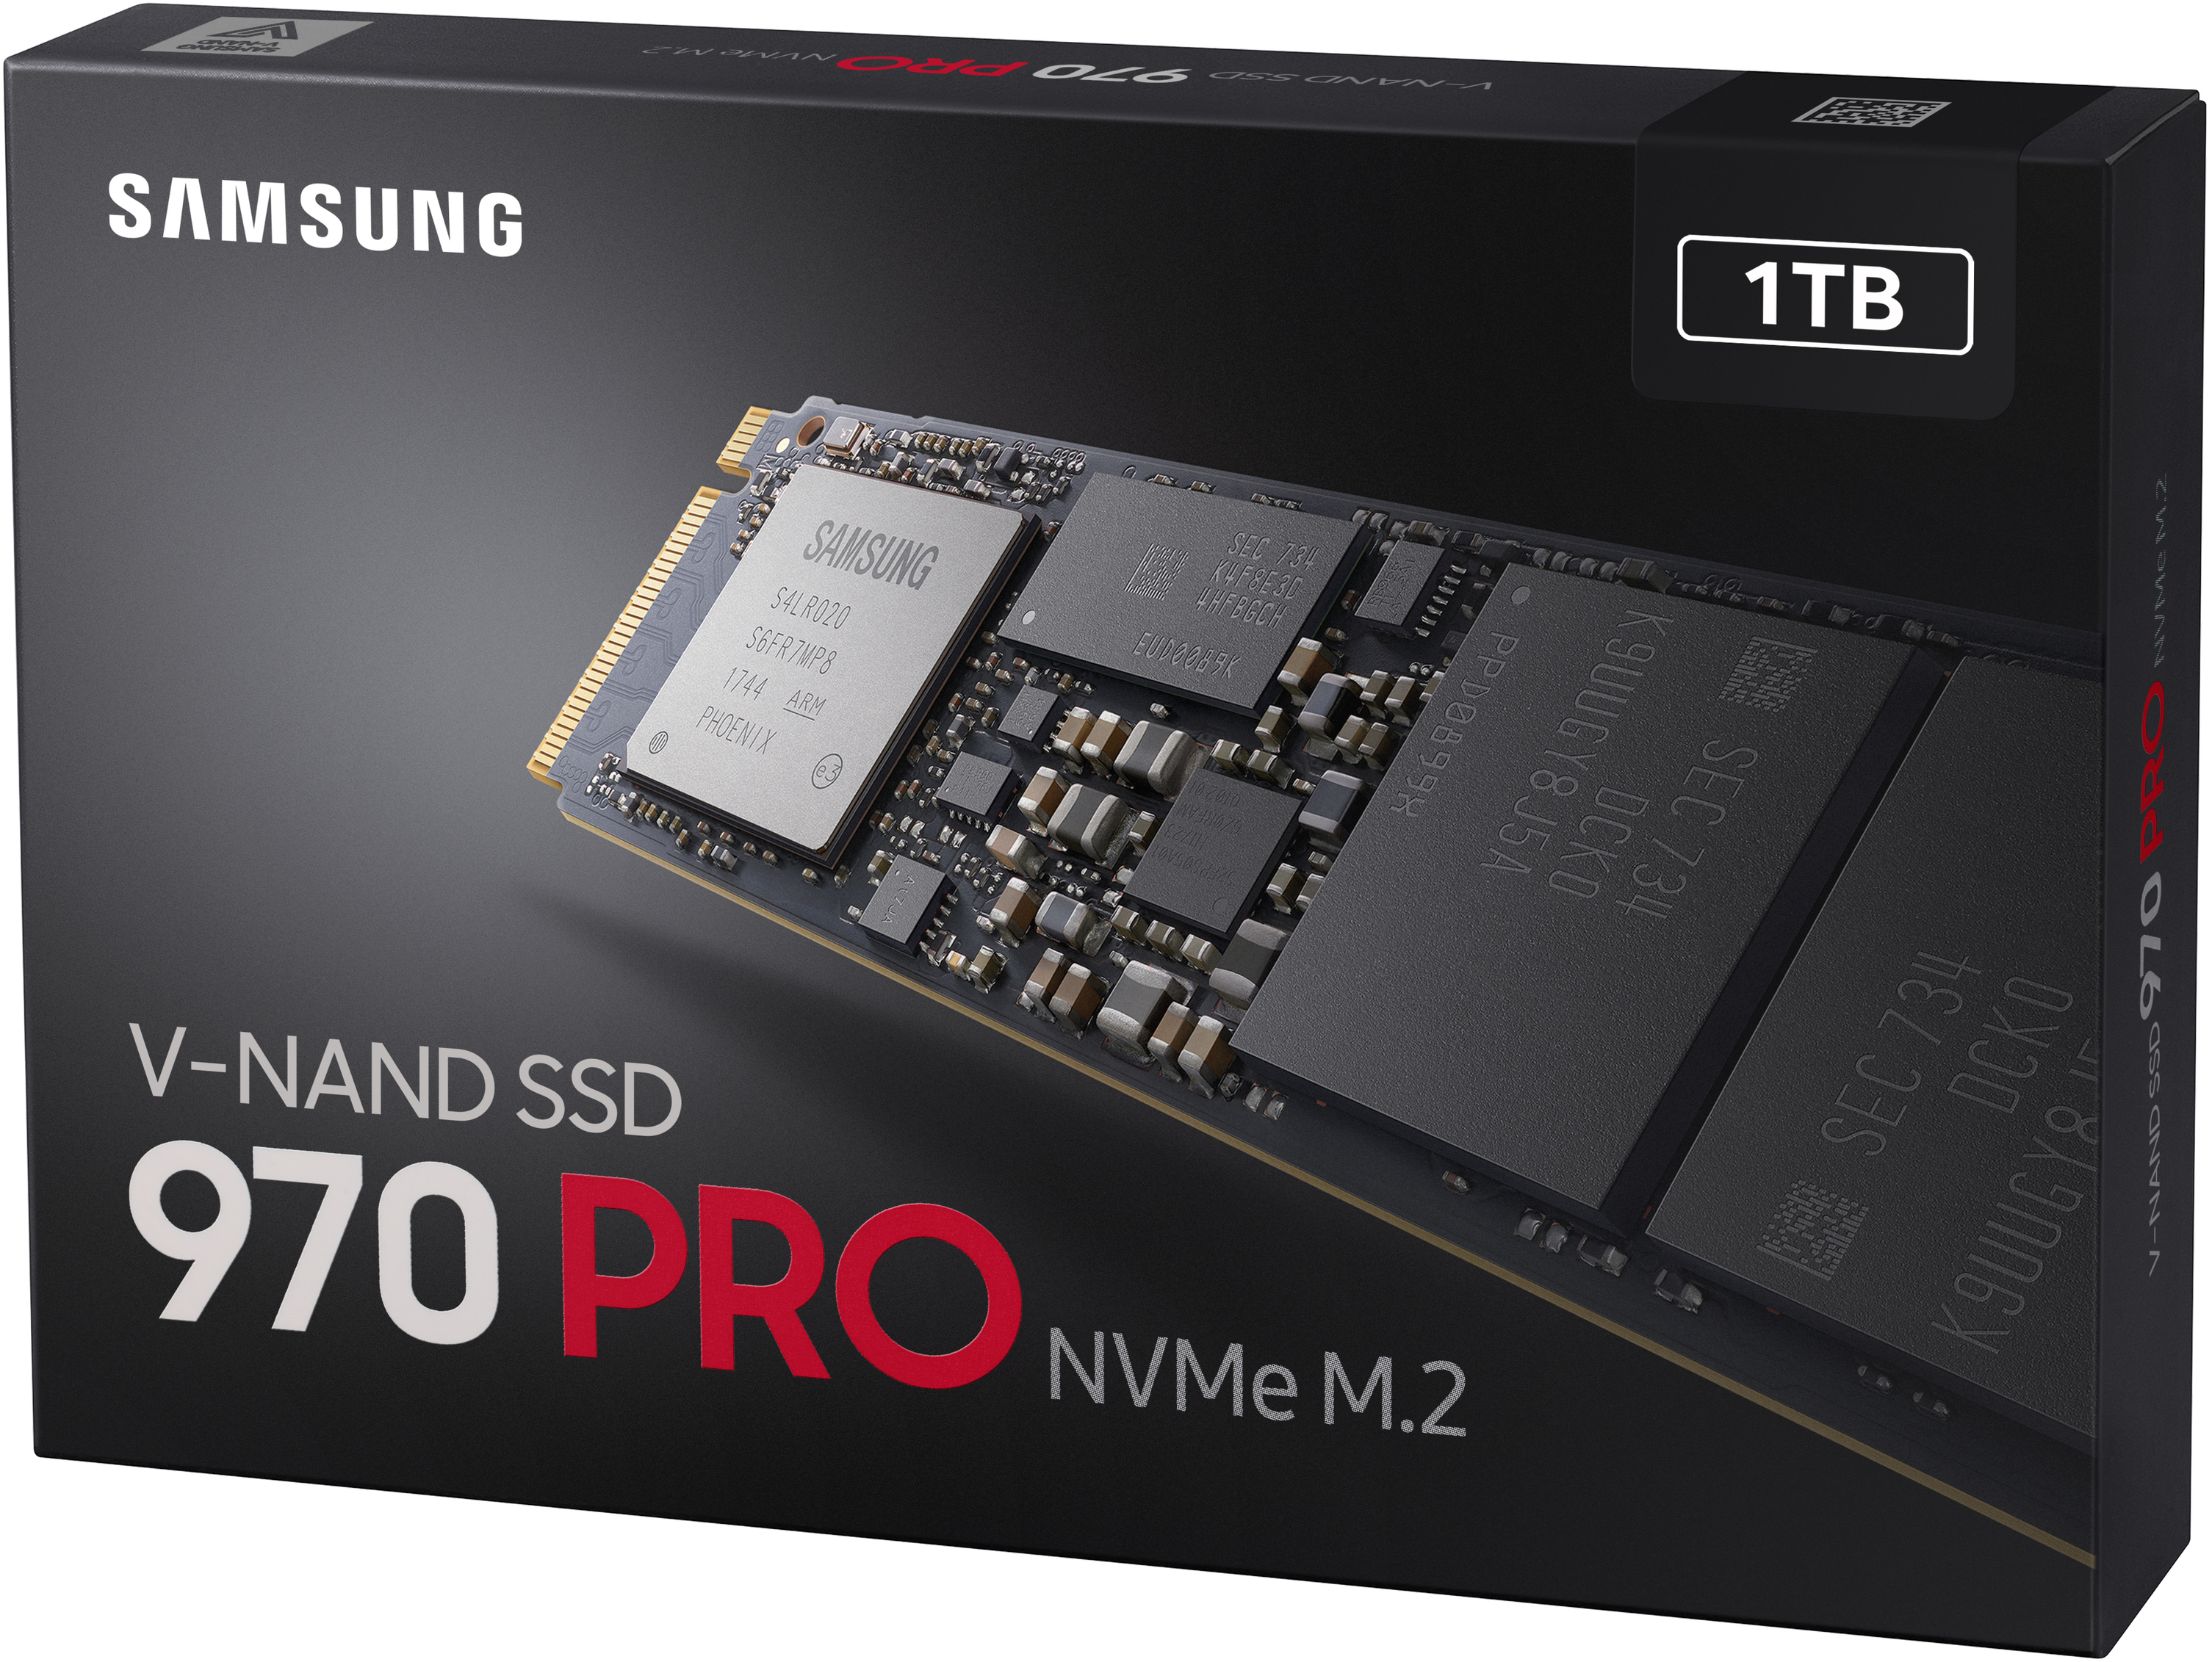 via Pro Retail, Festplatte SSD SAMSUNG 970 TB M.2 NVMe, 1 intern